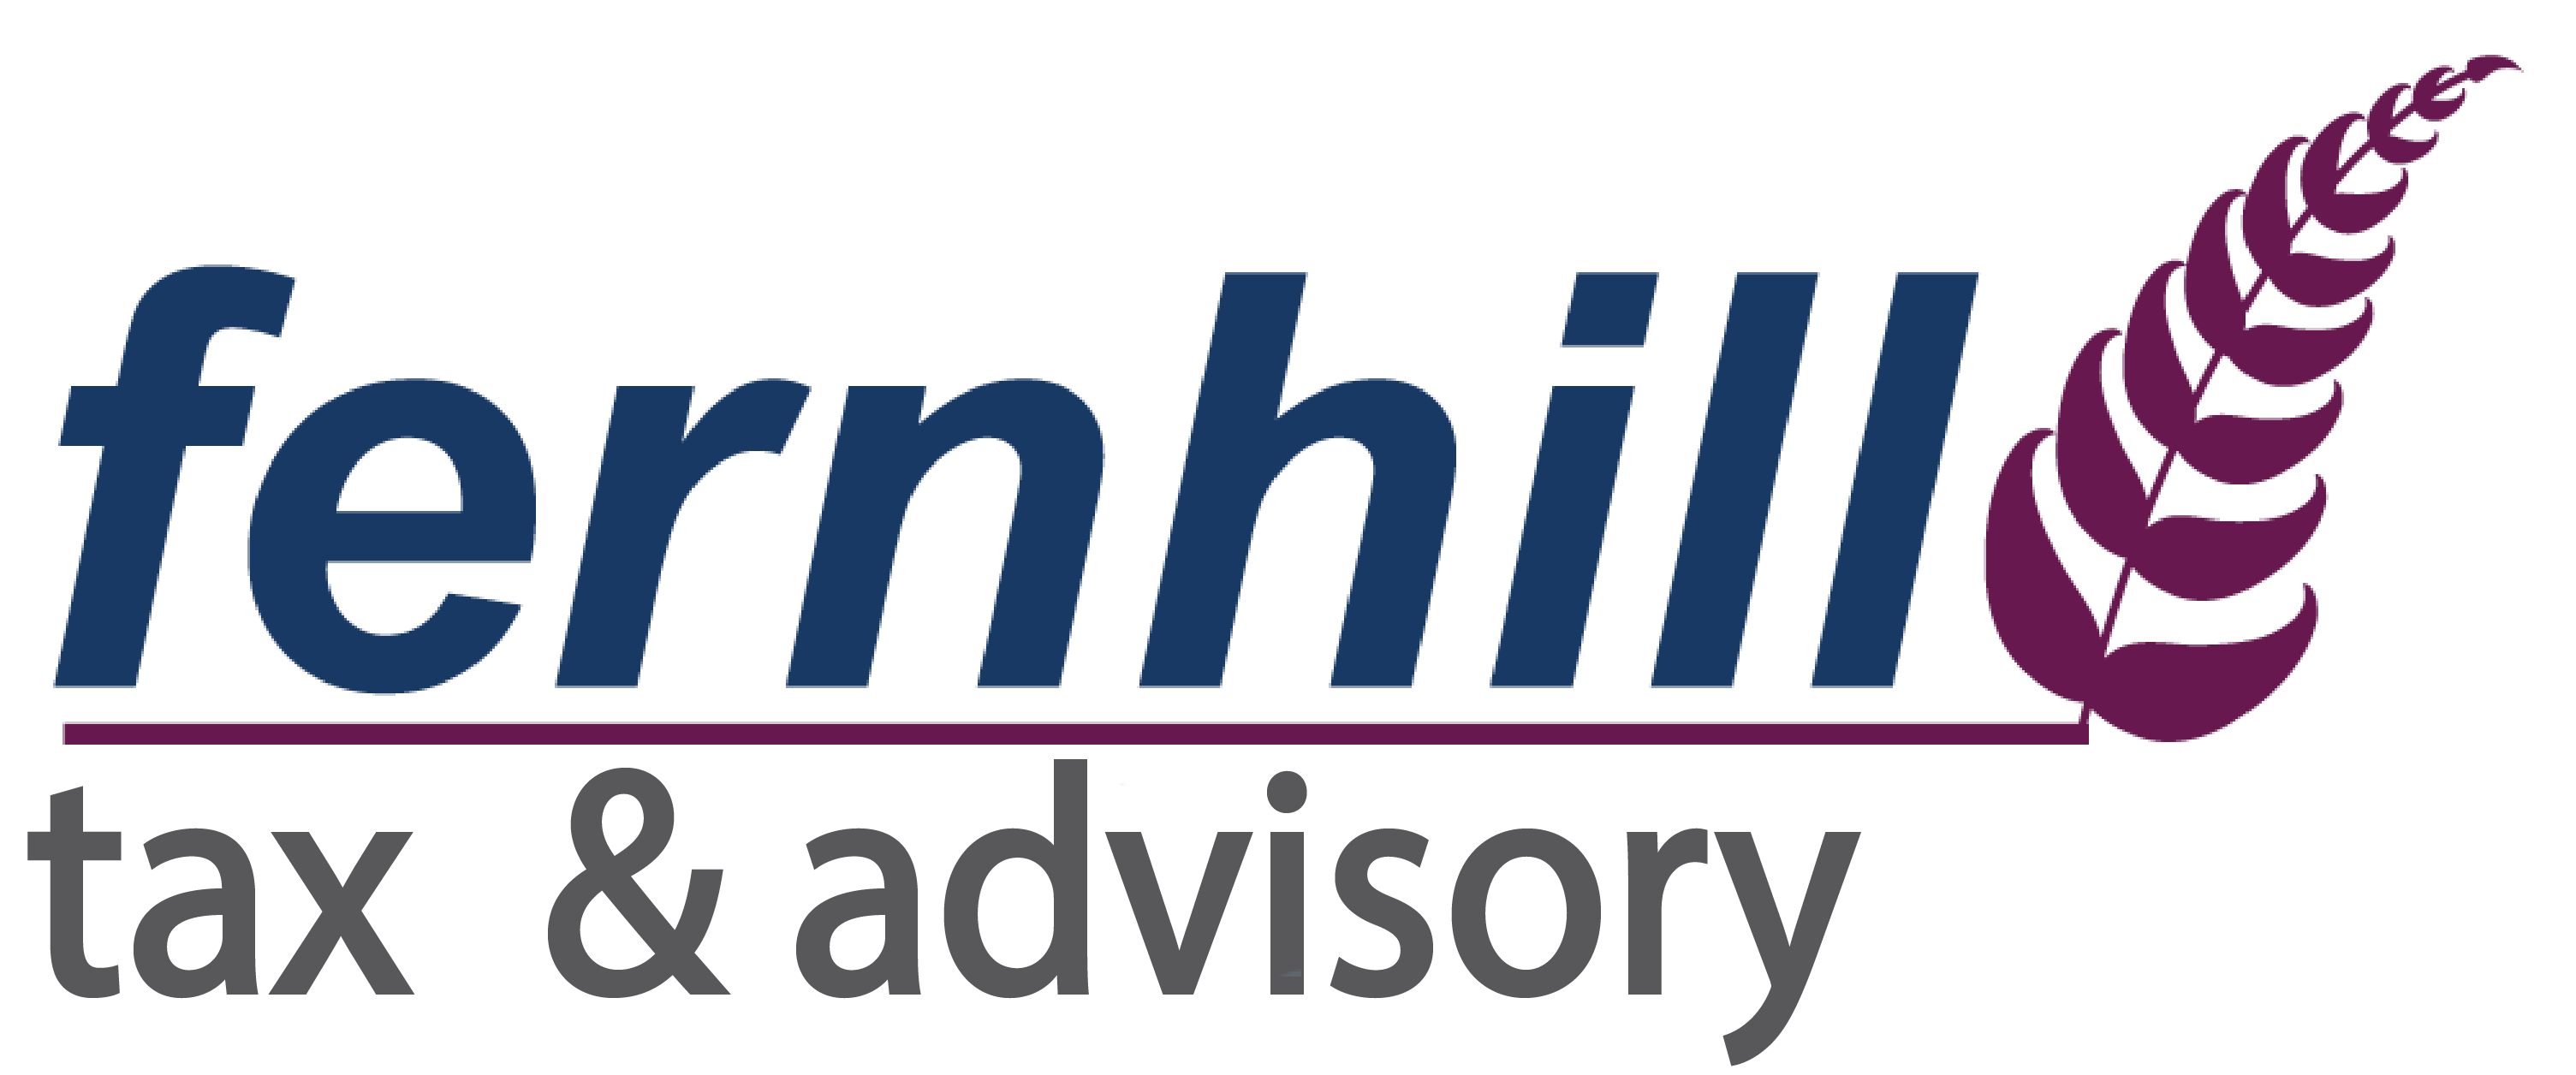 Fernhill Tax & Advisory